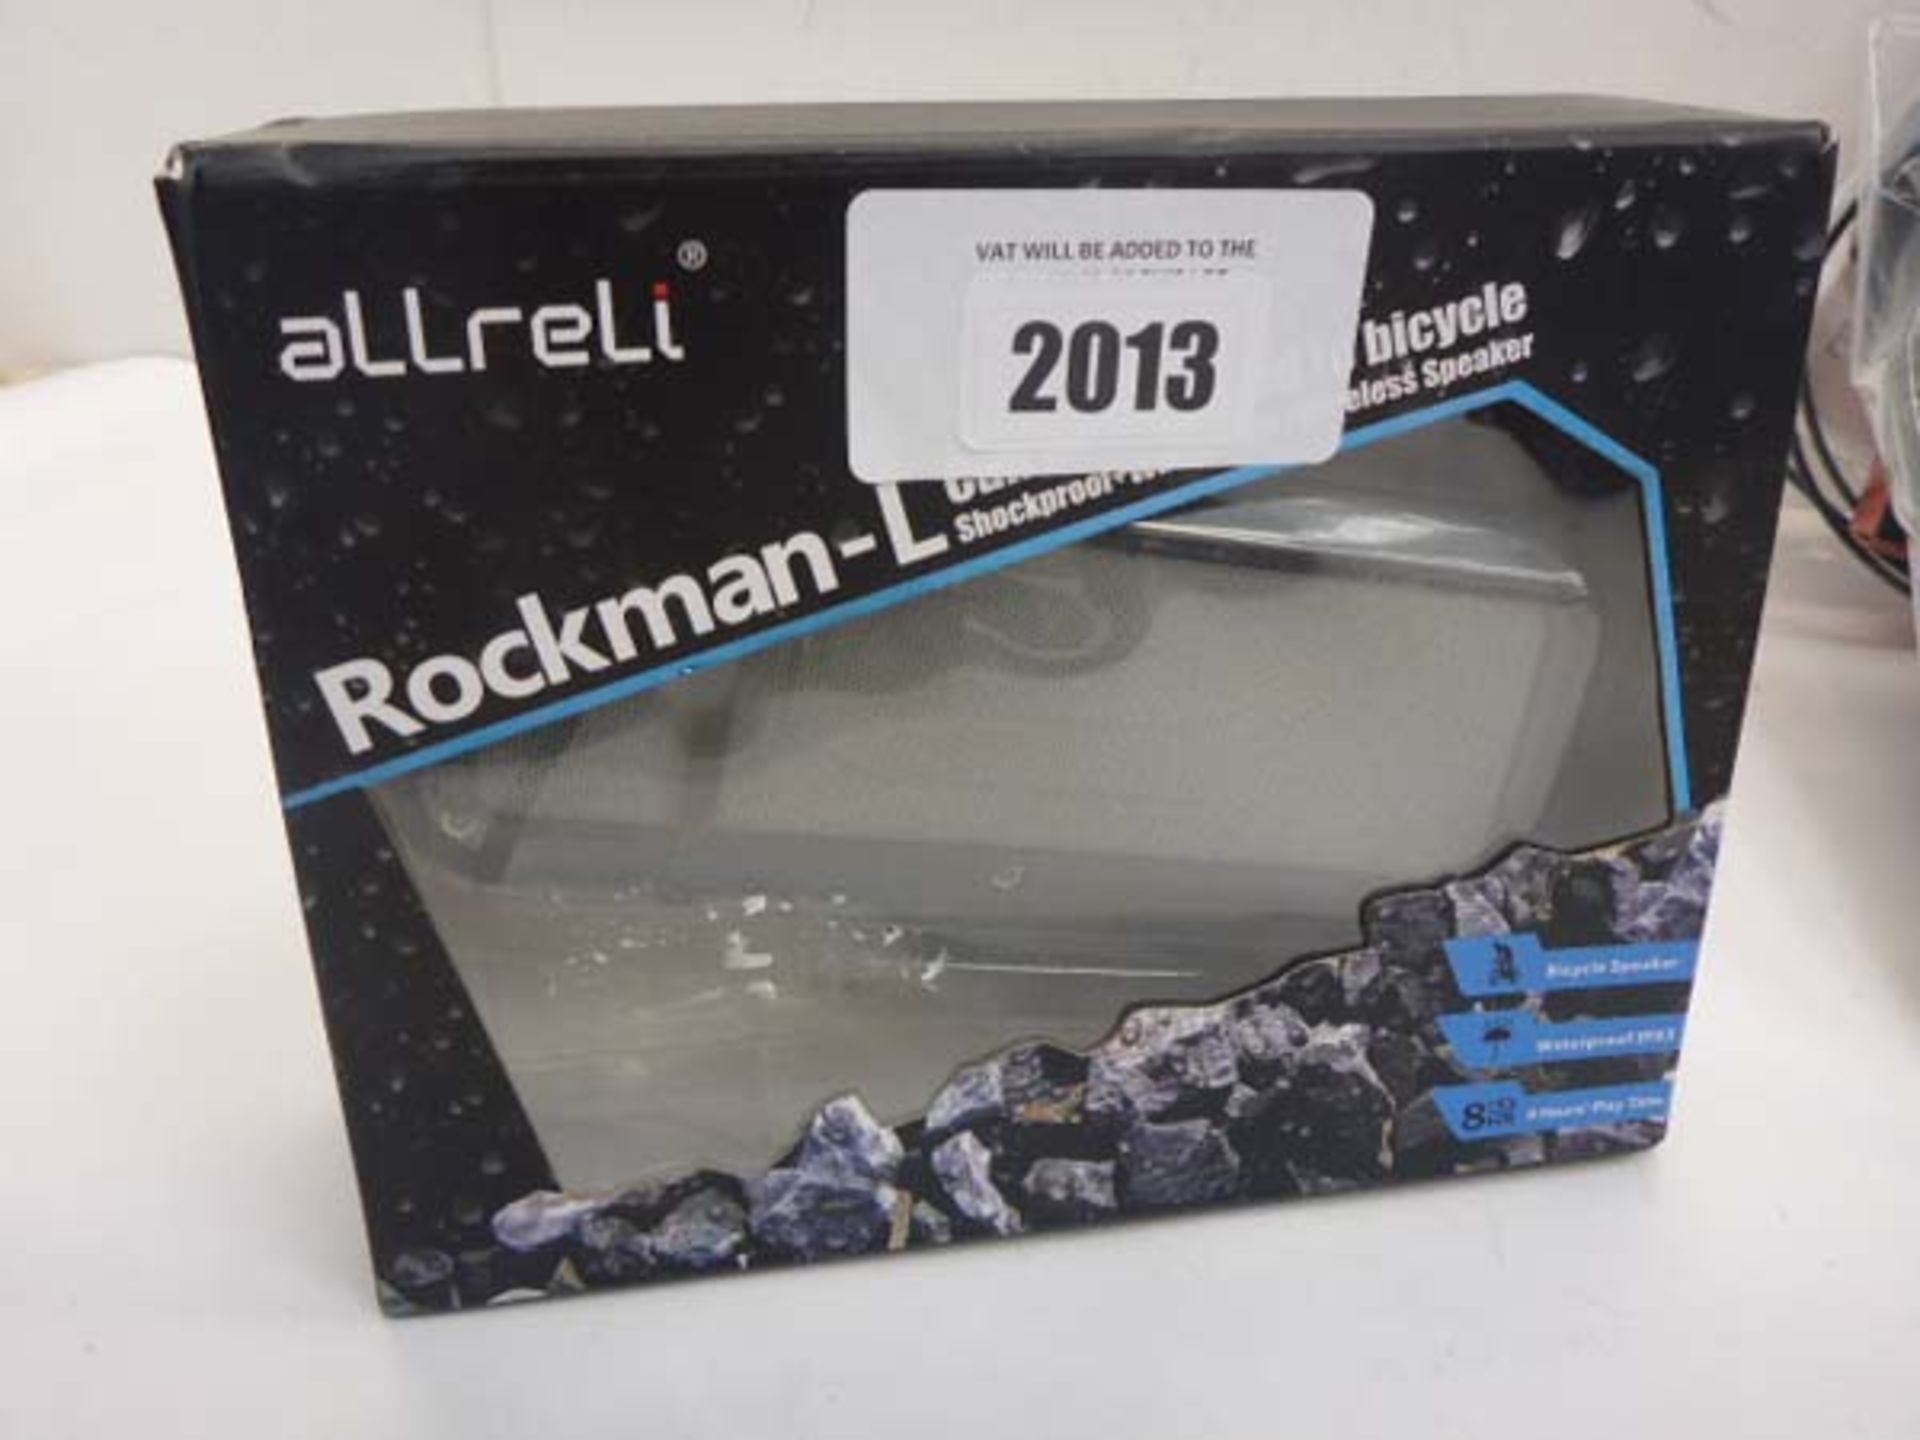 Allreli Rockman-L waterproof bicycle bluetooth speaker